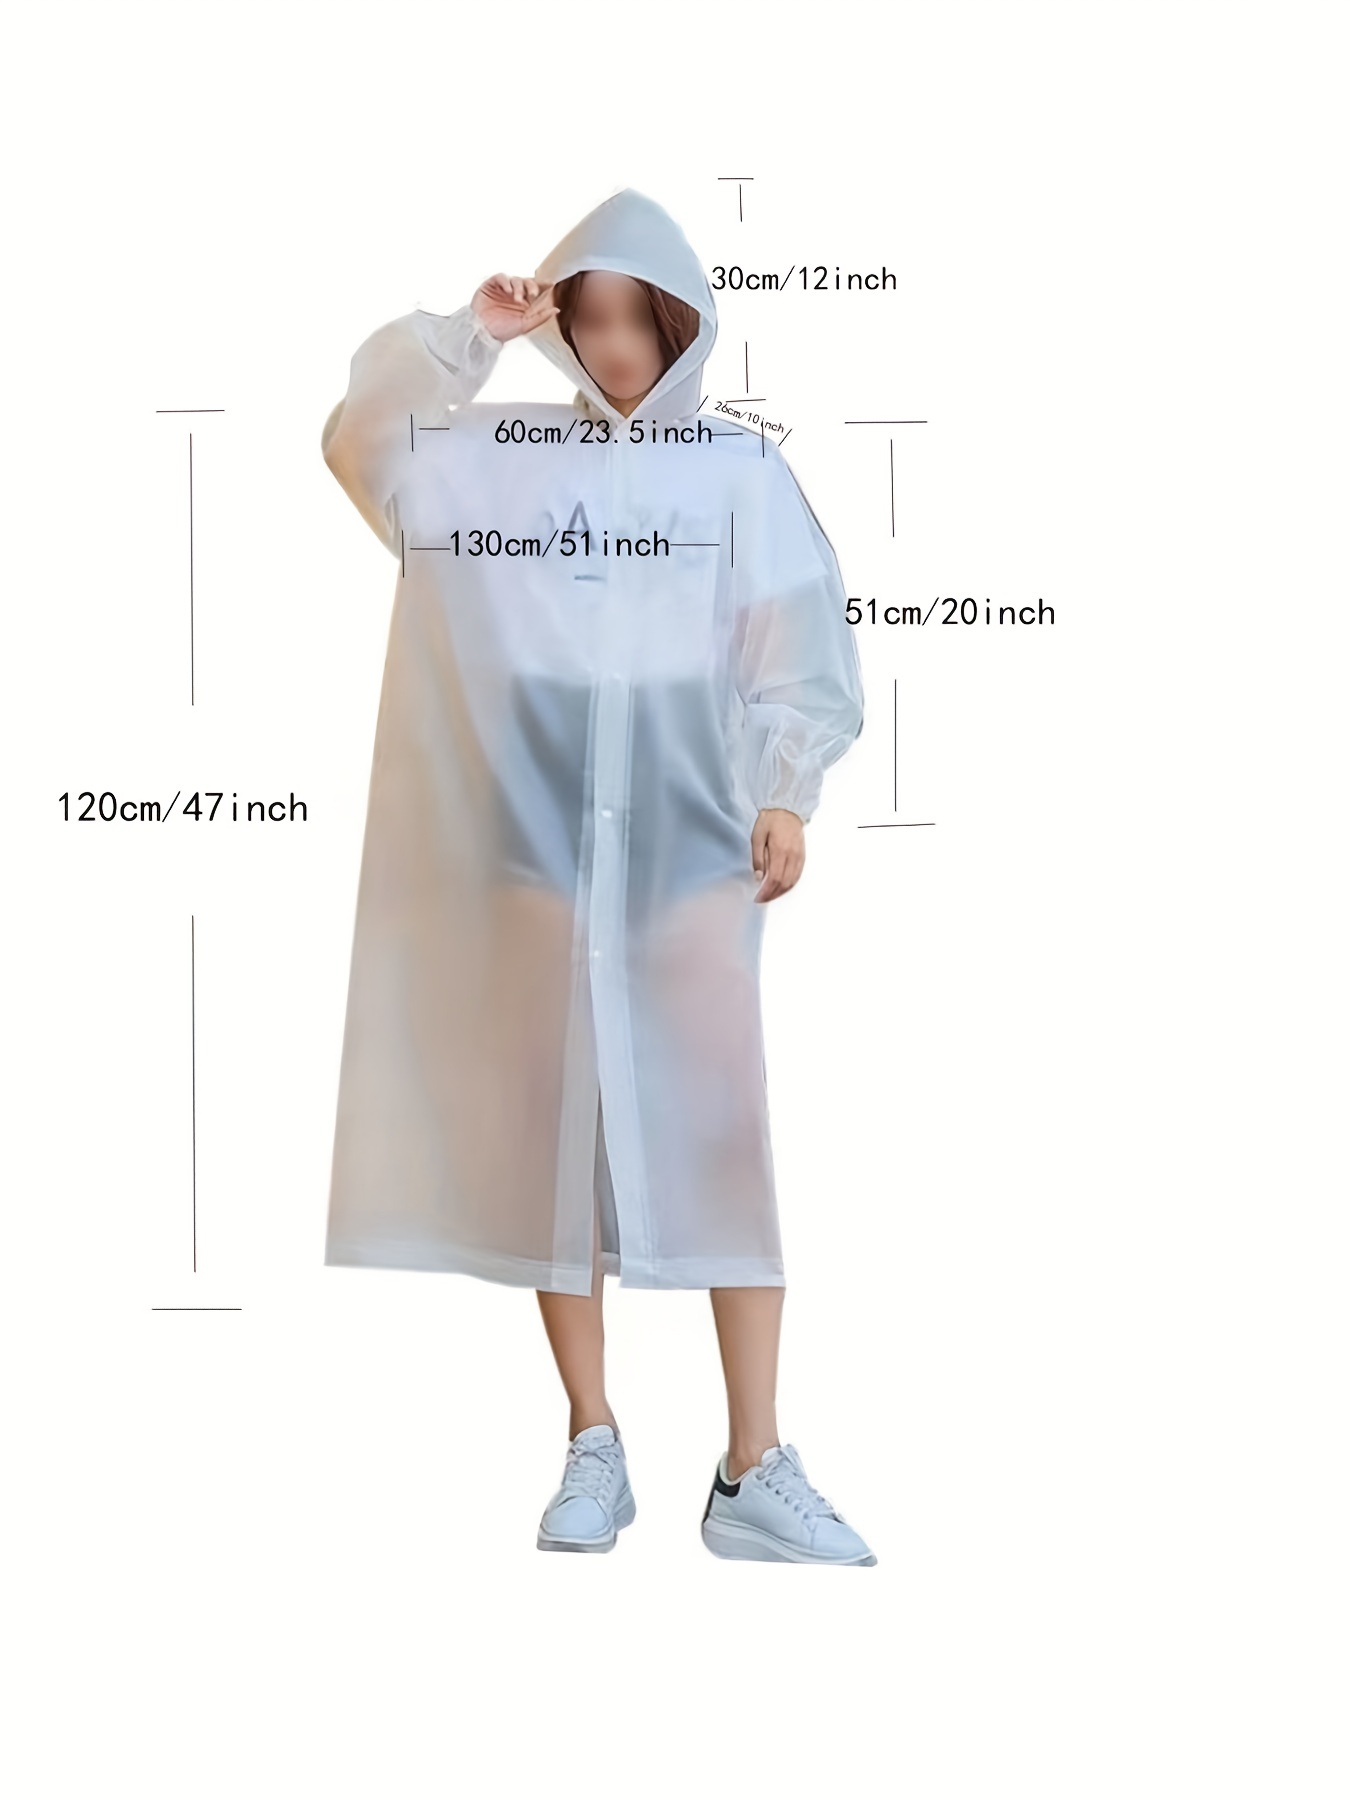 Stay Dry & Stylish: Reusable Waterproof Raincoat for Men & Women